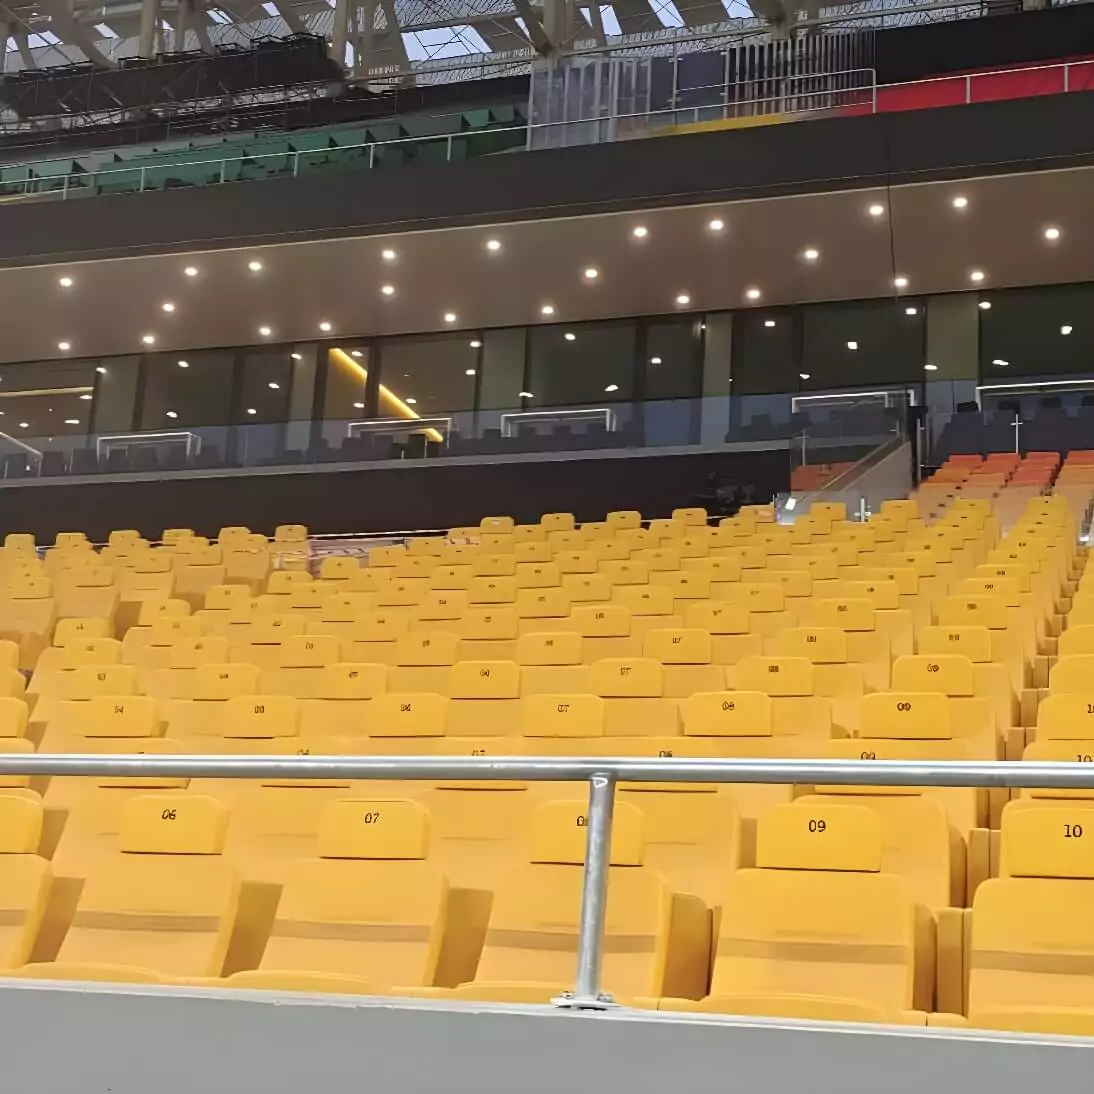 Arena / Stadium Seating Project - Monseat Image